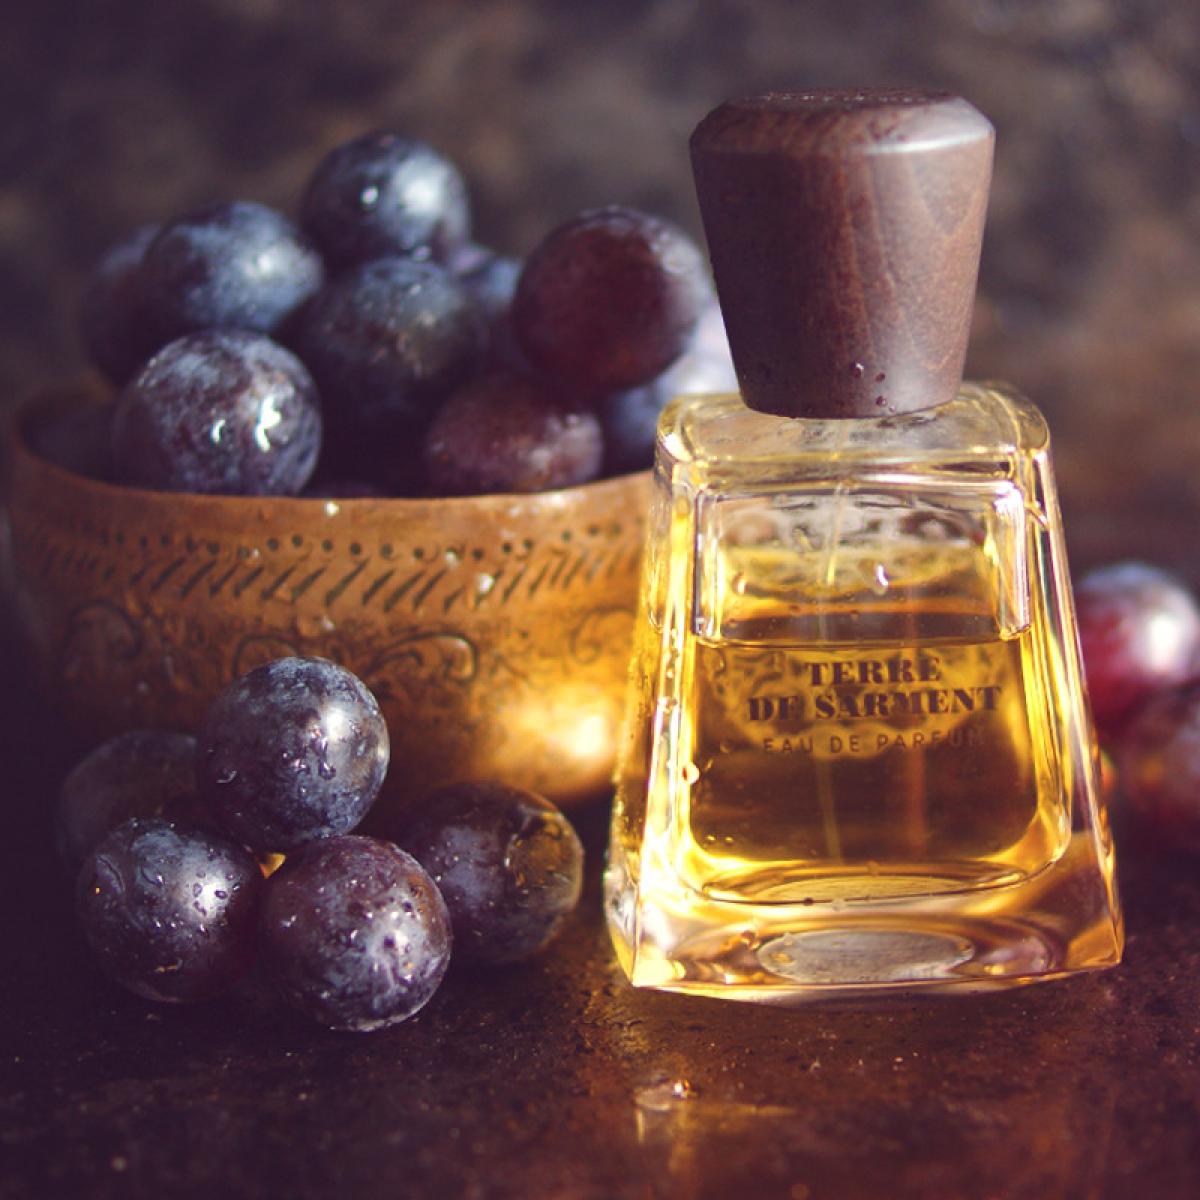 Terre de Sarment Frapin perfume - a fragrance for women and men 2007